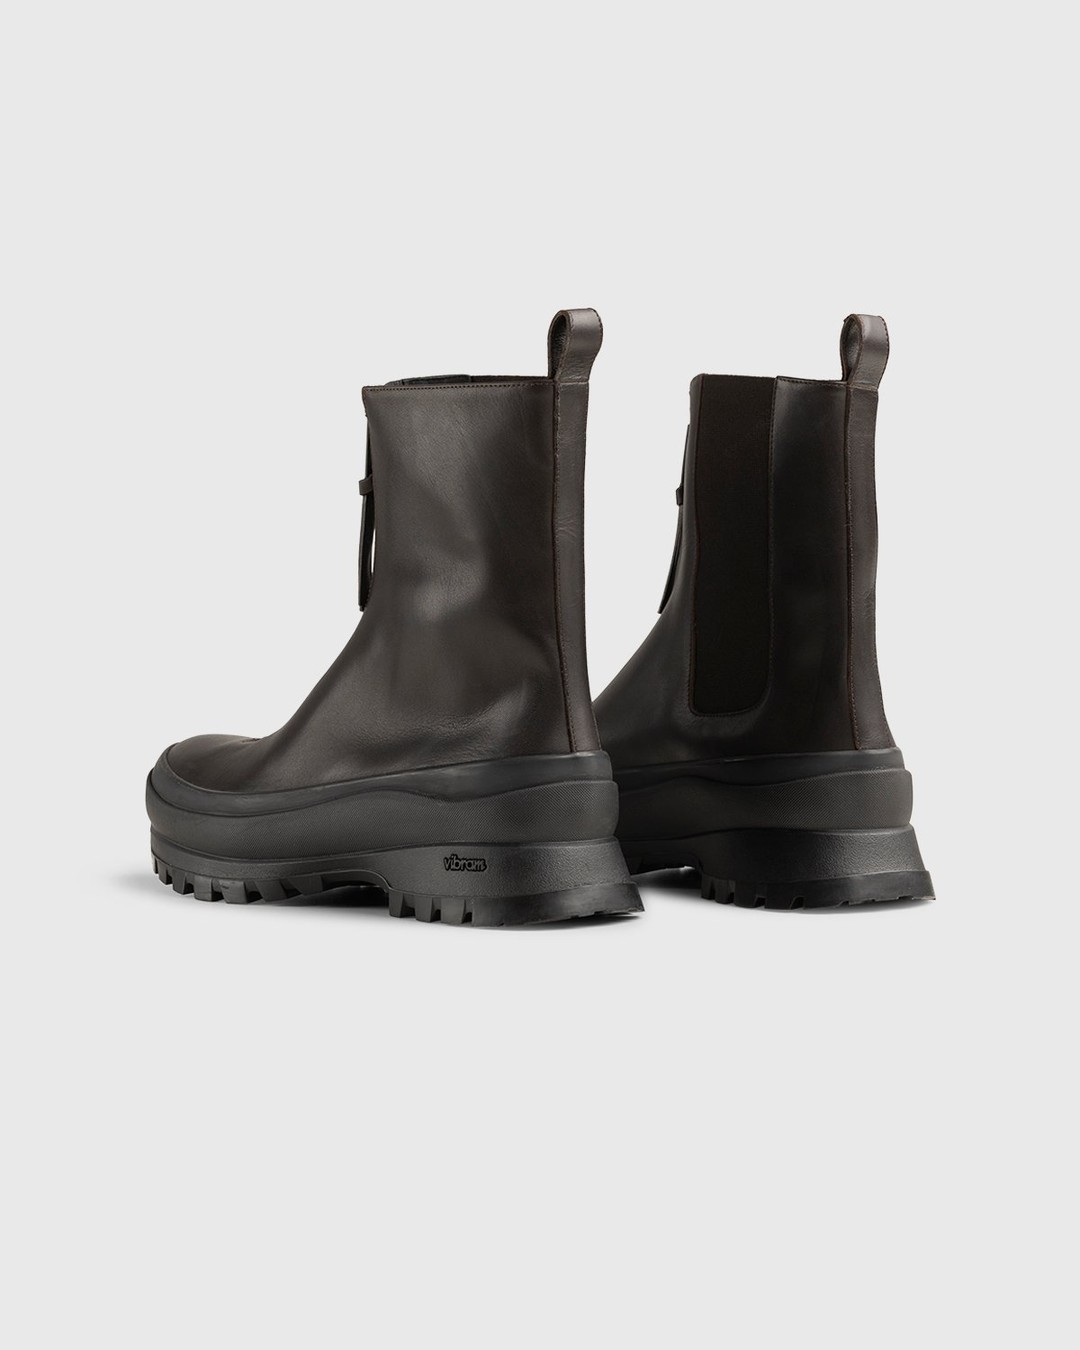 Jil Sander – Zip Up Boots Brown - Boots - Brown - Image 4